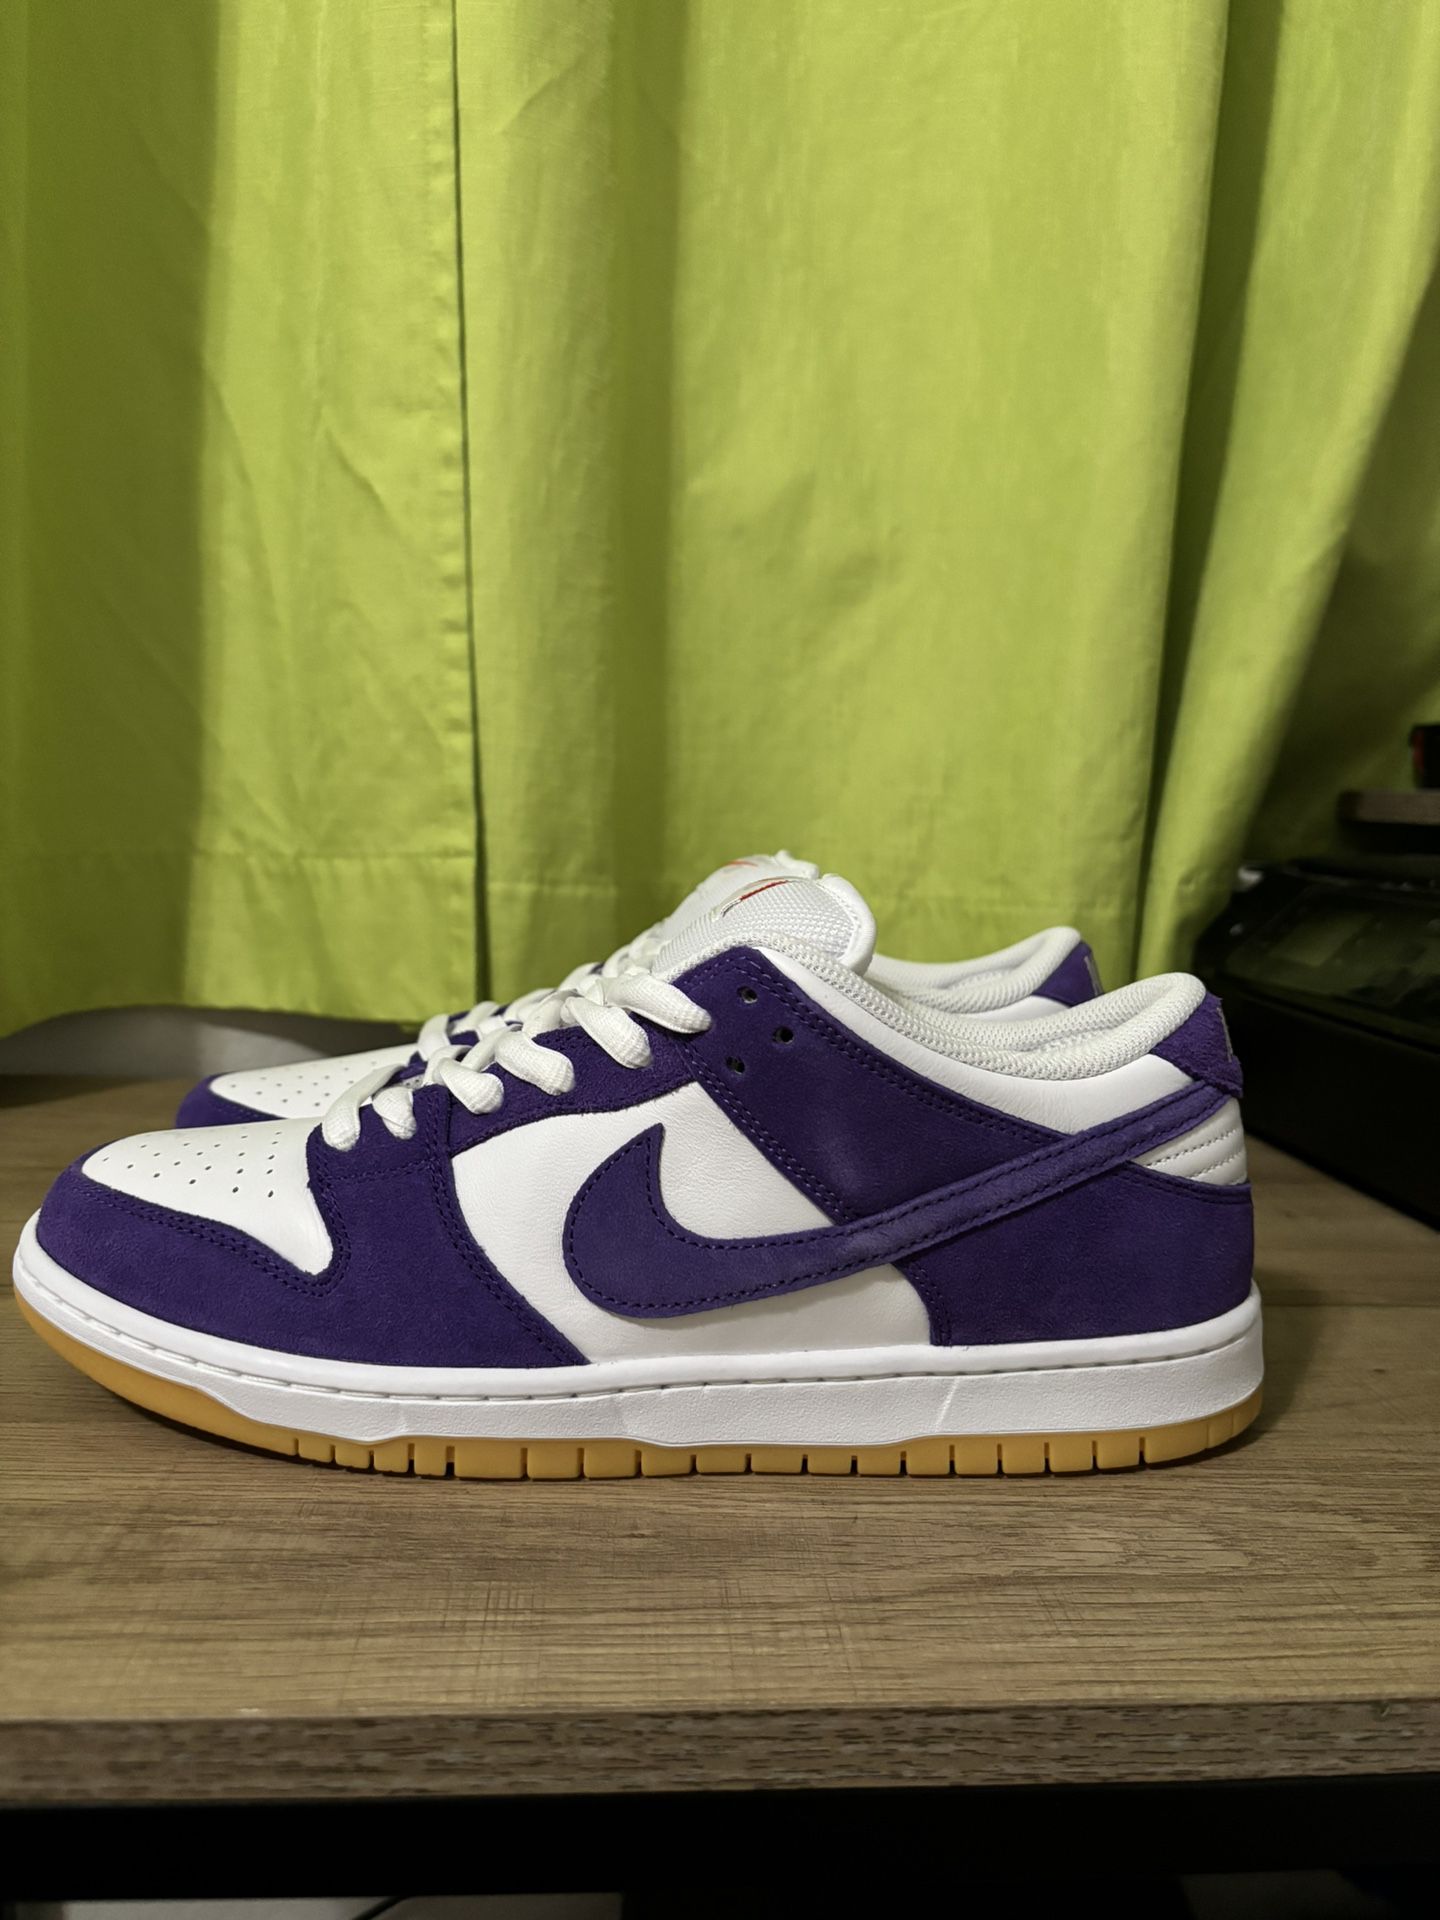 Nike Sb Purple Suede Size 10.5M New 